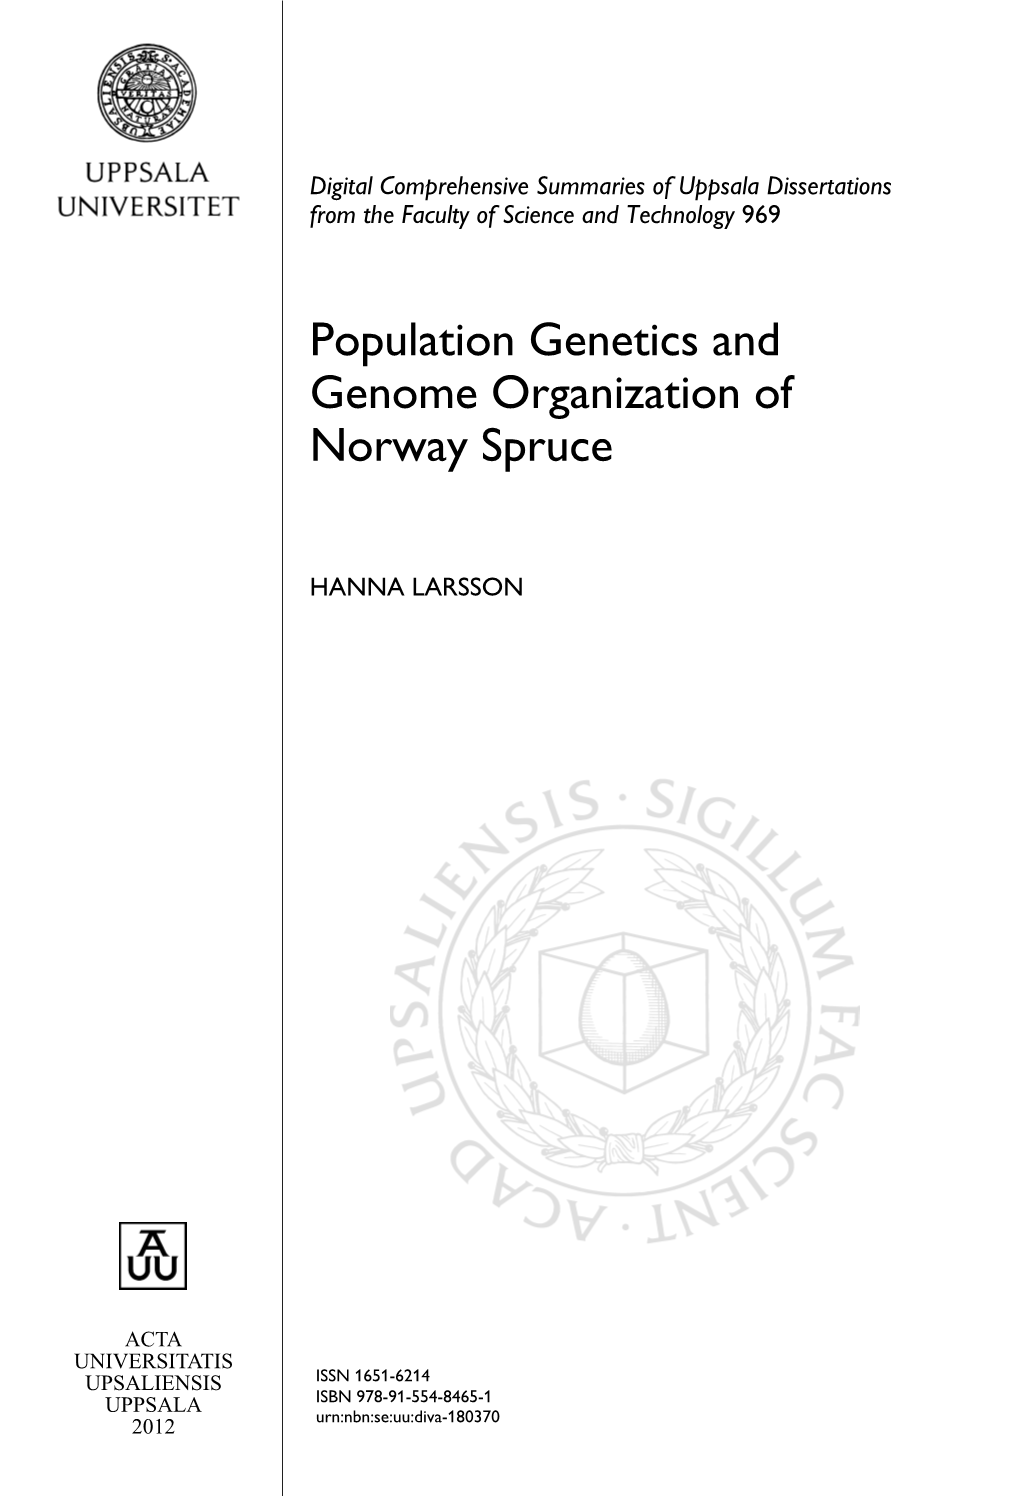 Population Genetics and Genome Organization of Norway Spruce